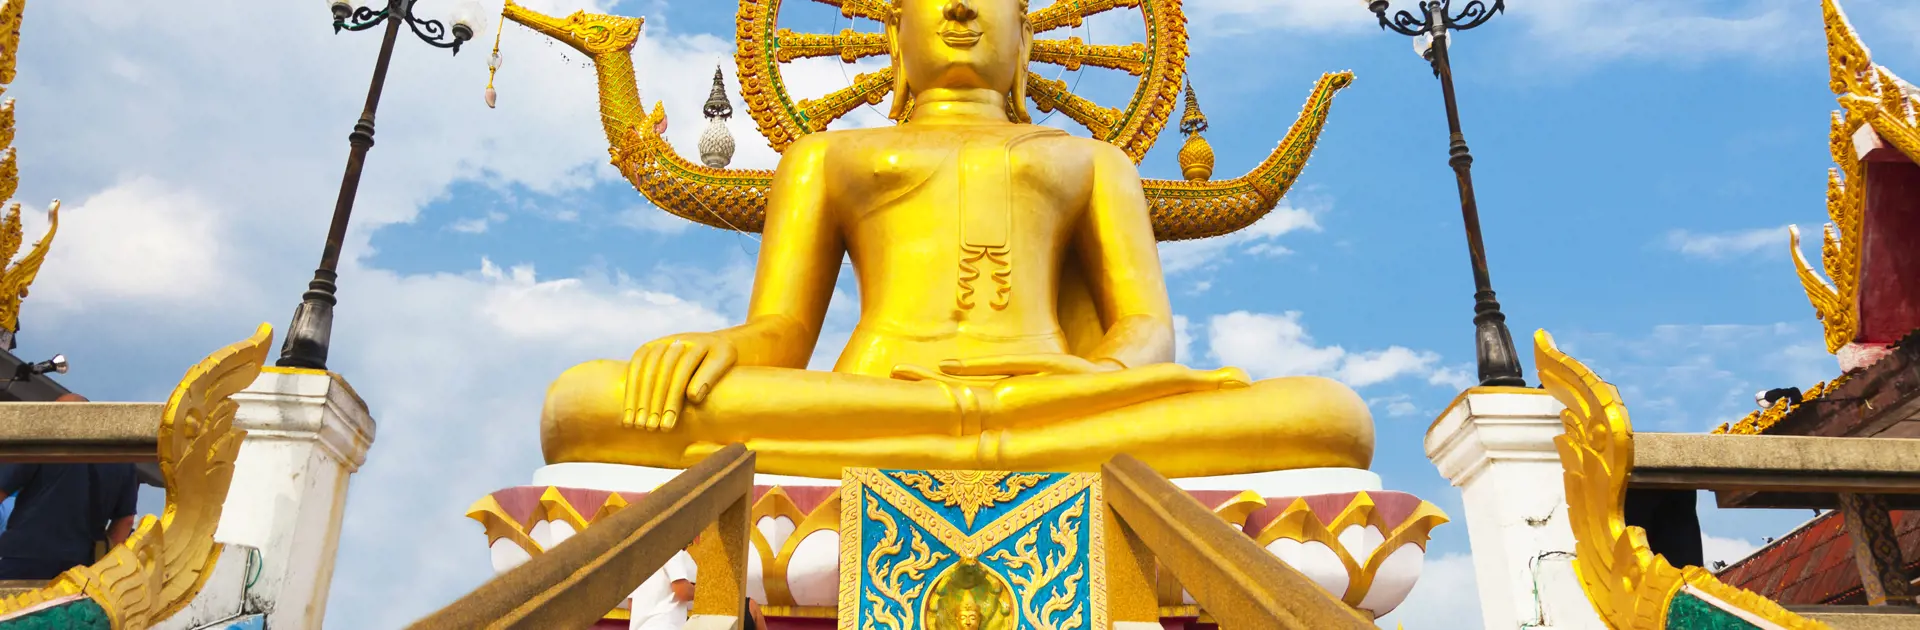 shutterstock_70209475 big buddha statue on koh samui, thailand.jpg